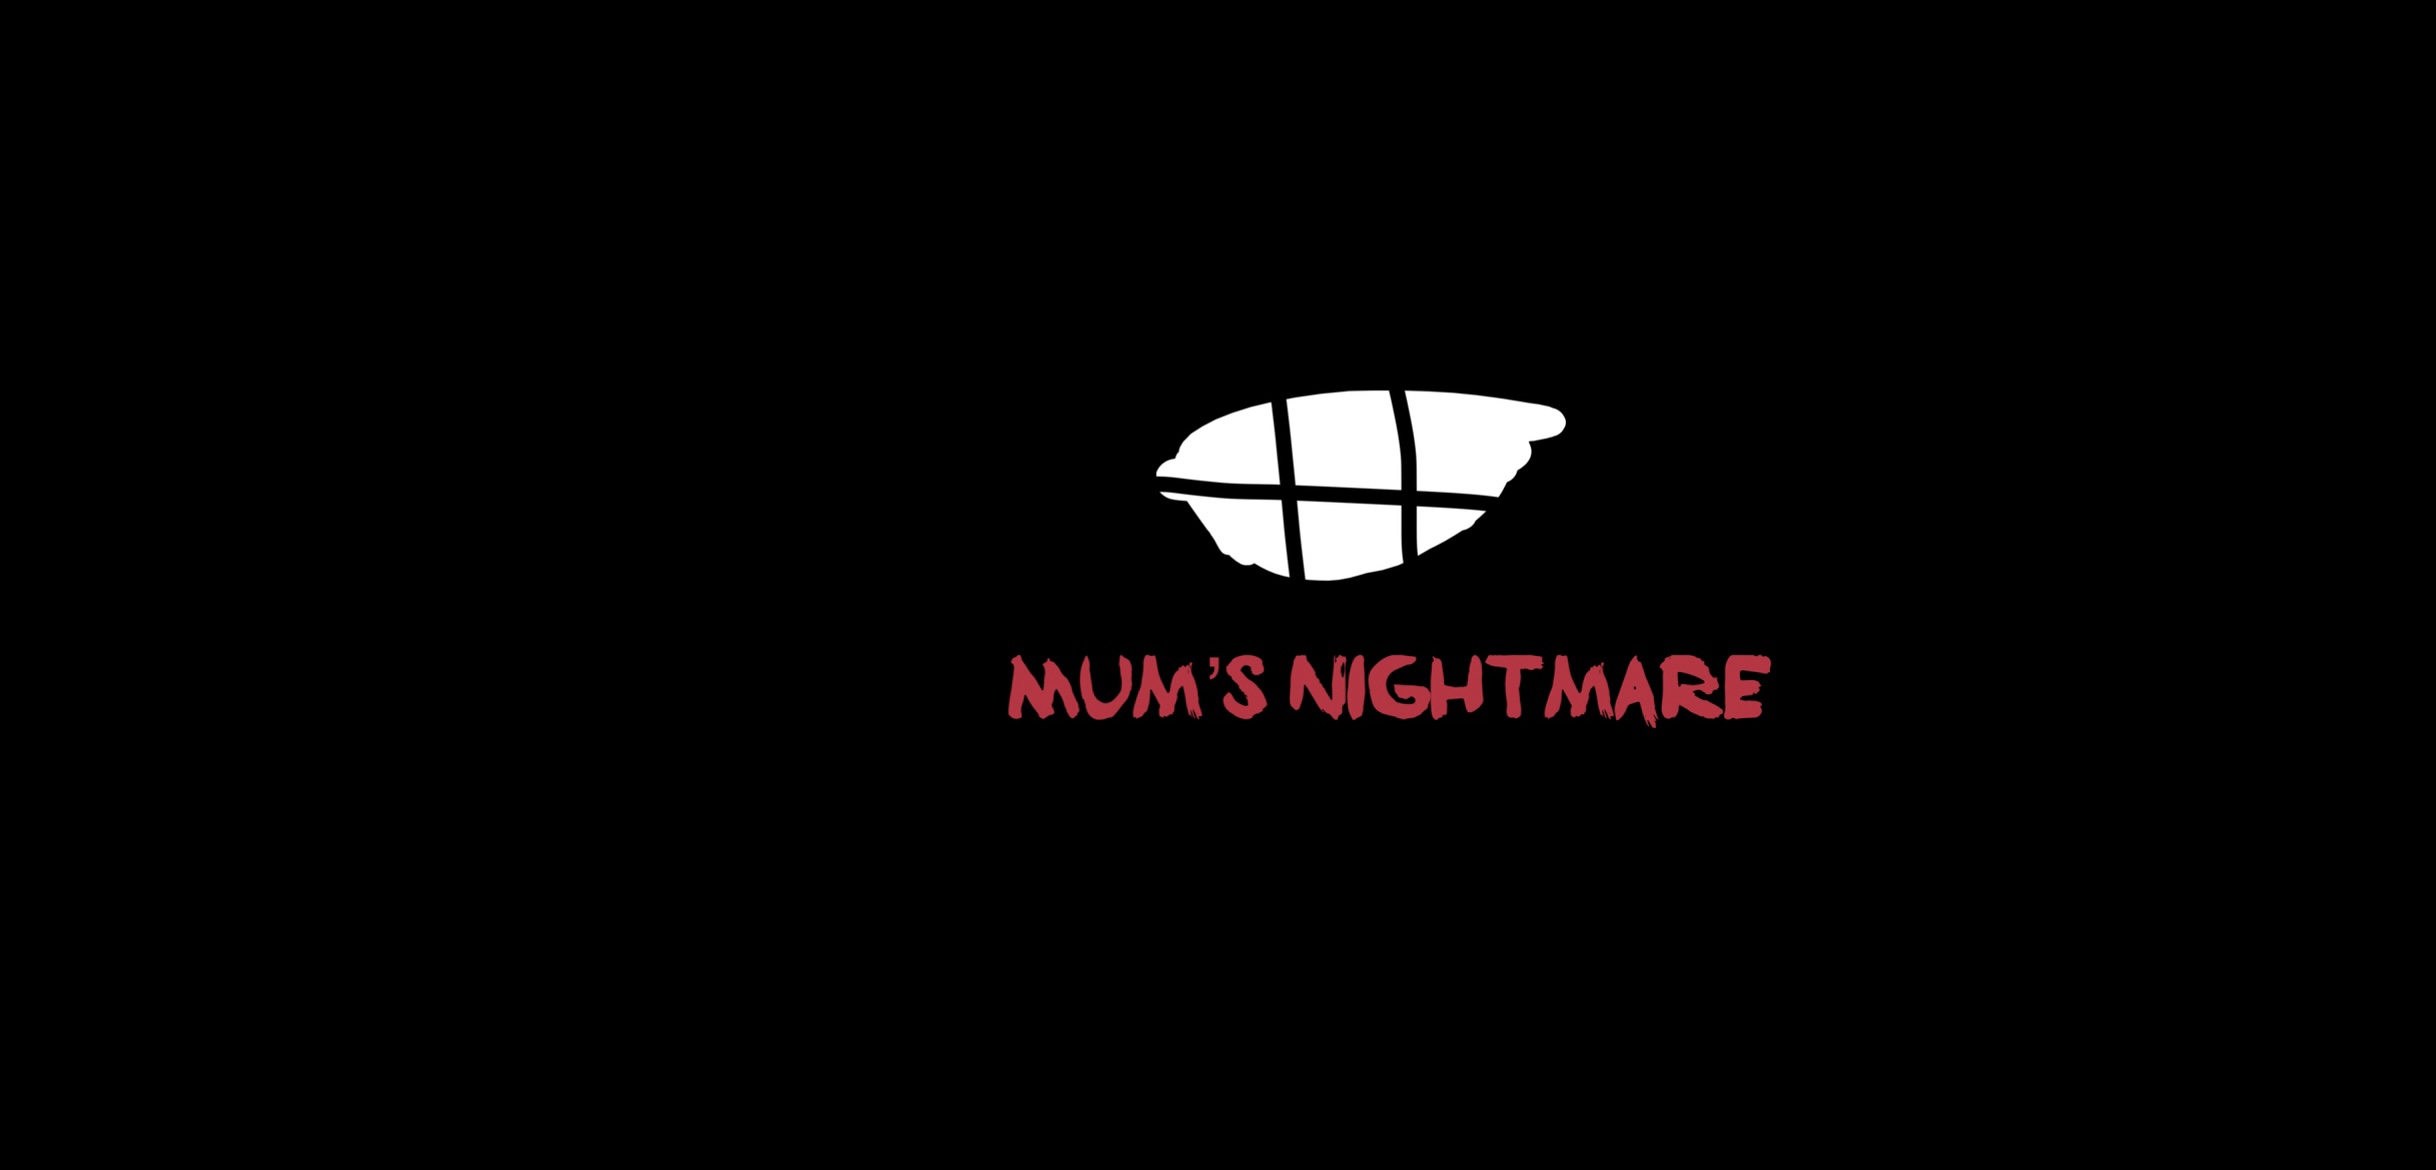 Mum’s nightmare (PC)